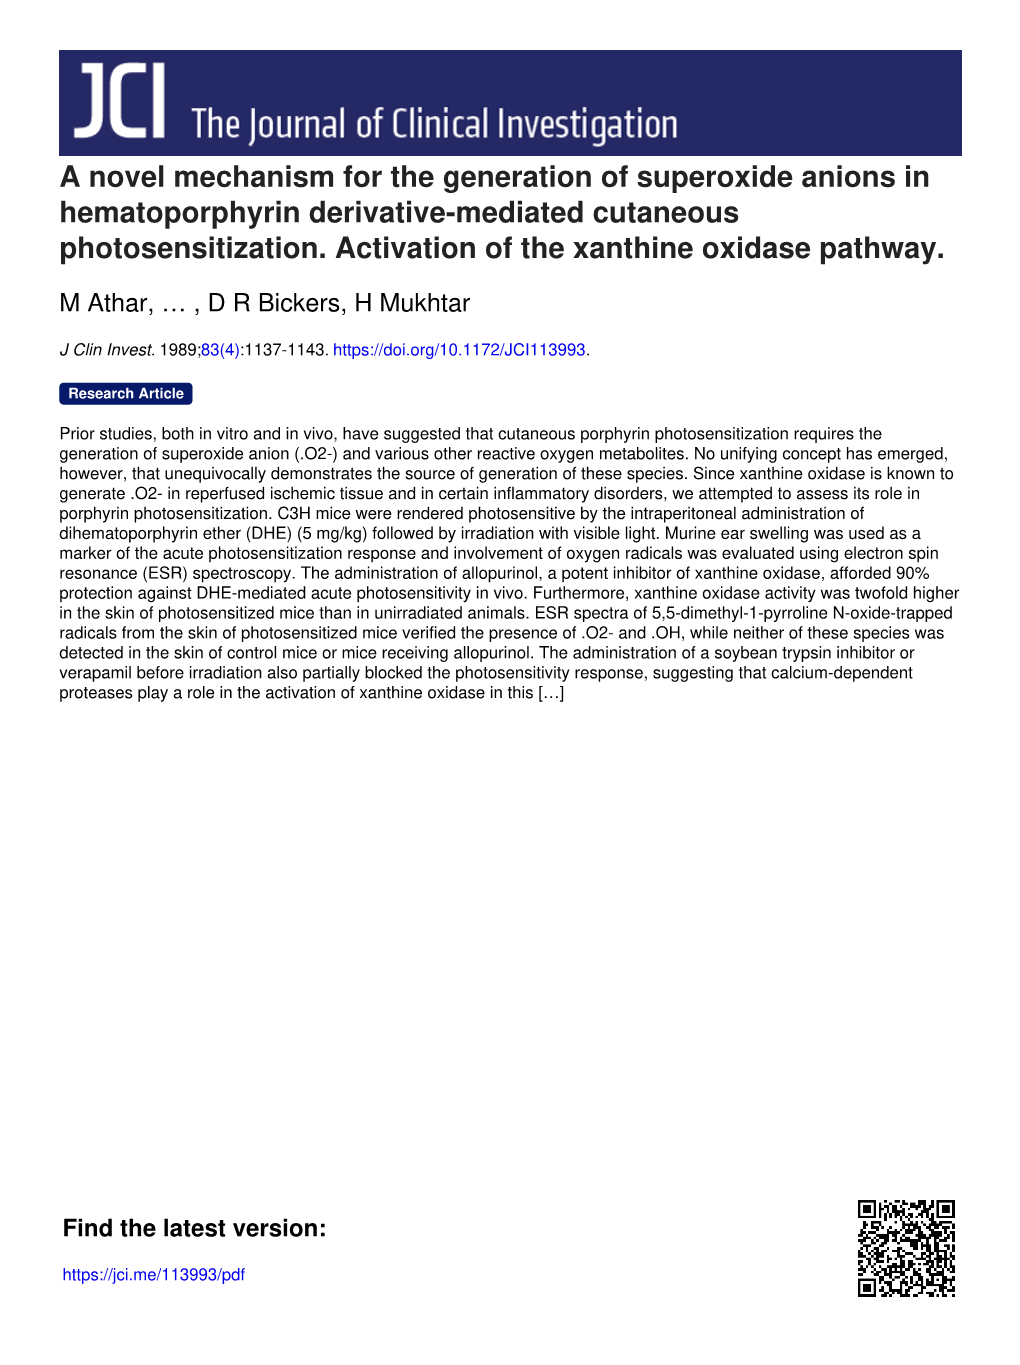 A Novel Mechanism for the Generation of Superoxide Anions in Hematoporphyrin Derivative-Mediated Cutaneous Photosensitization